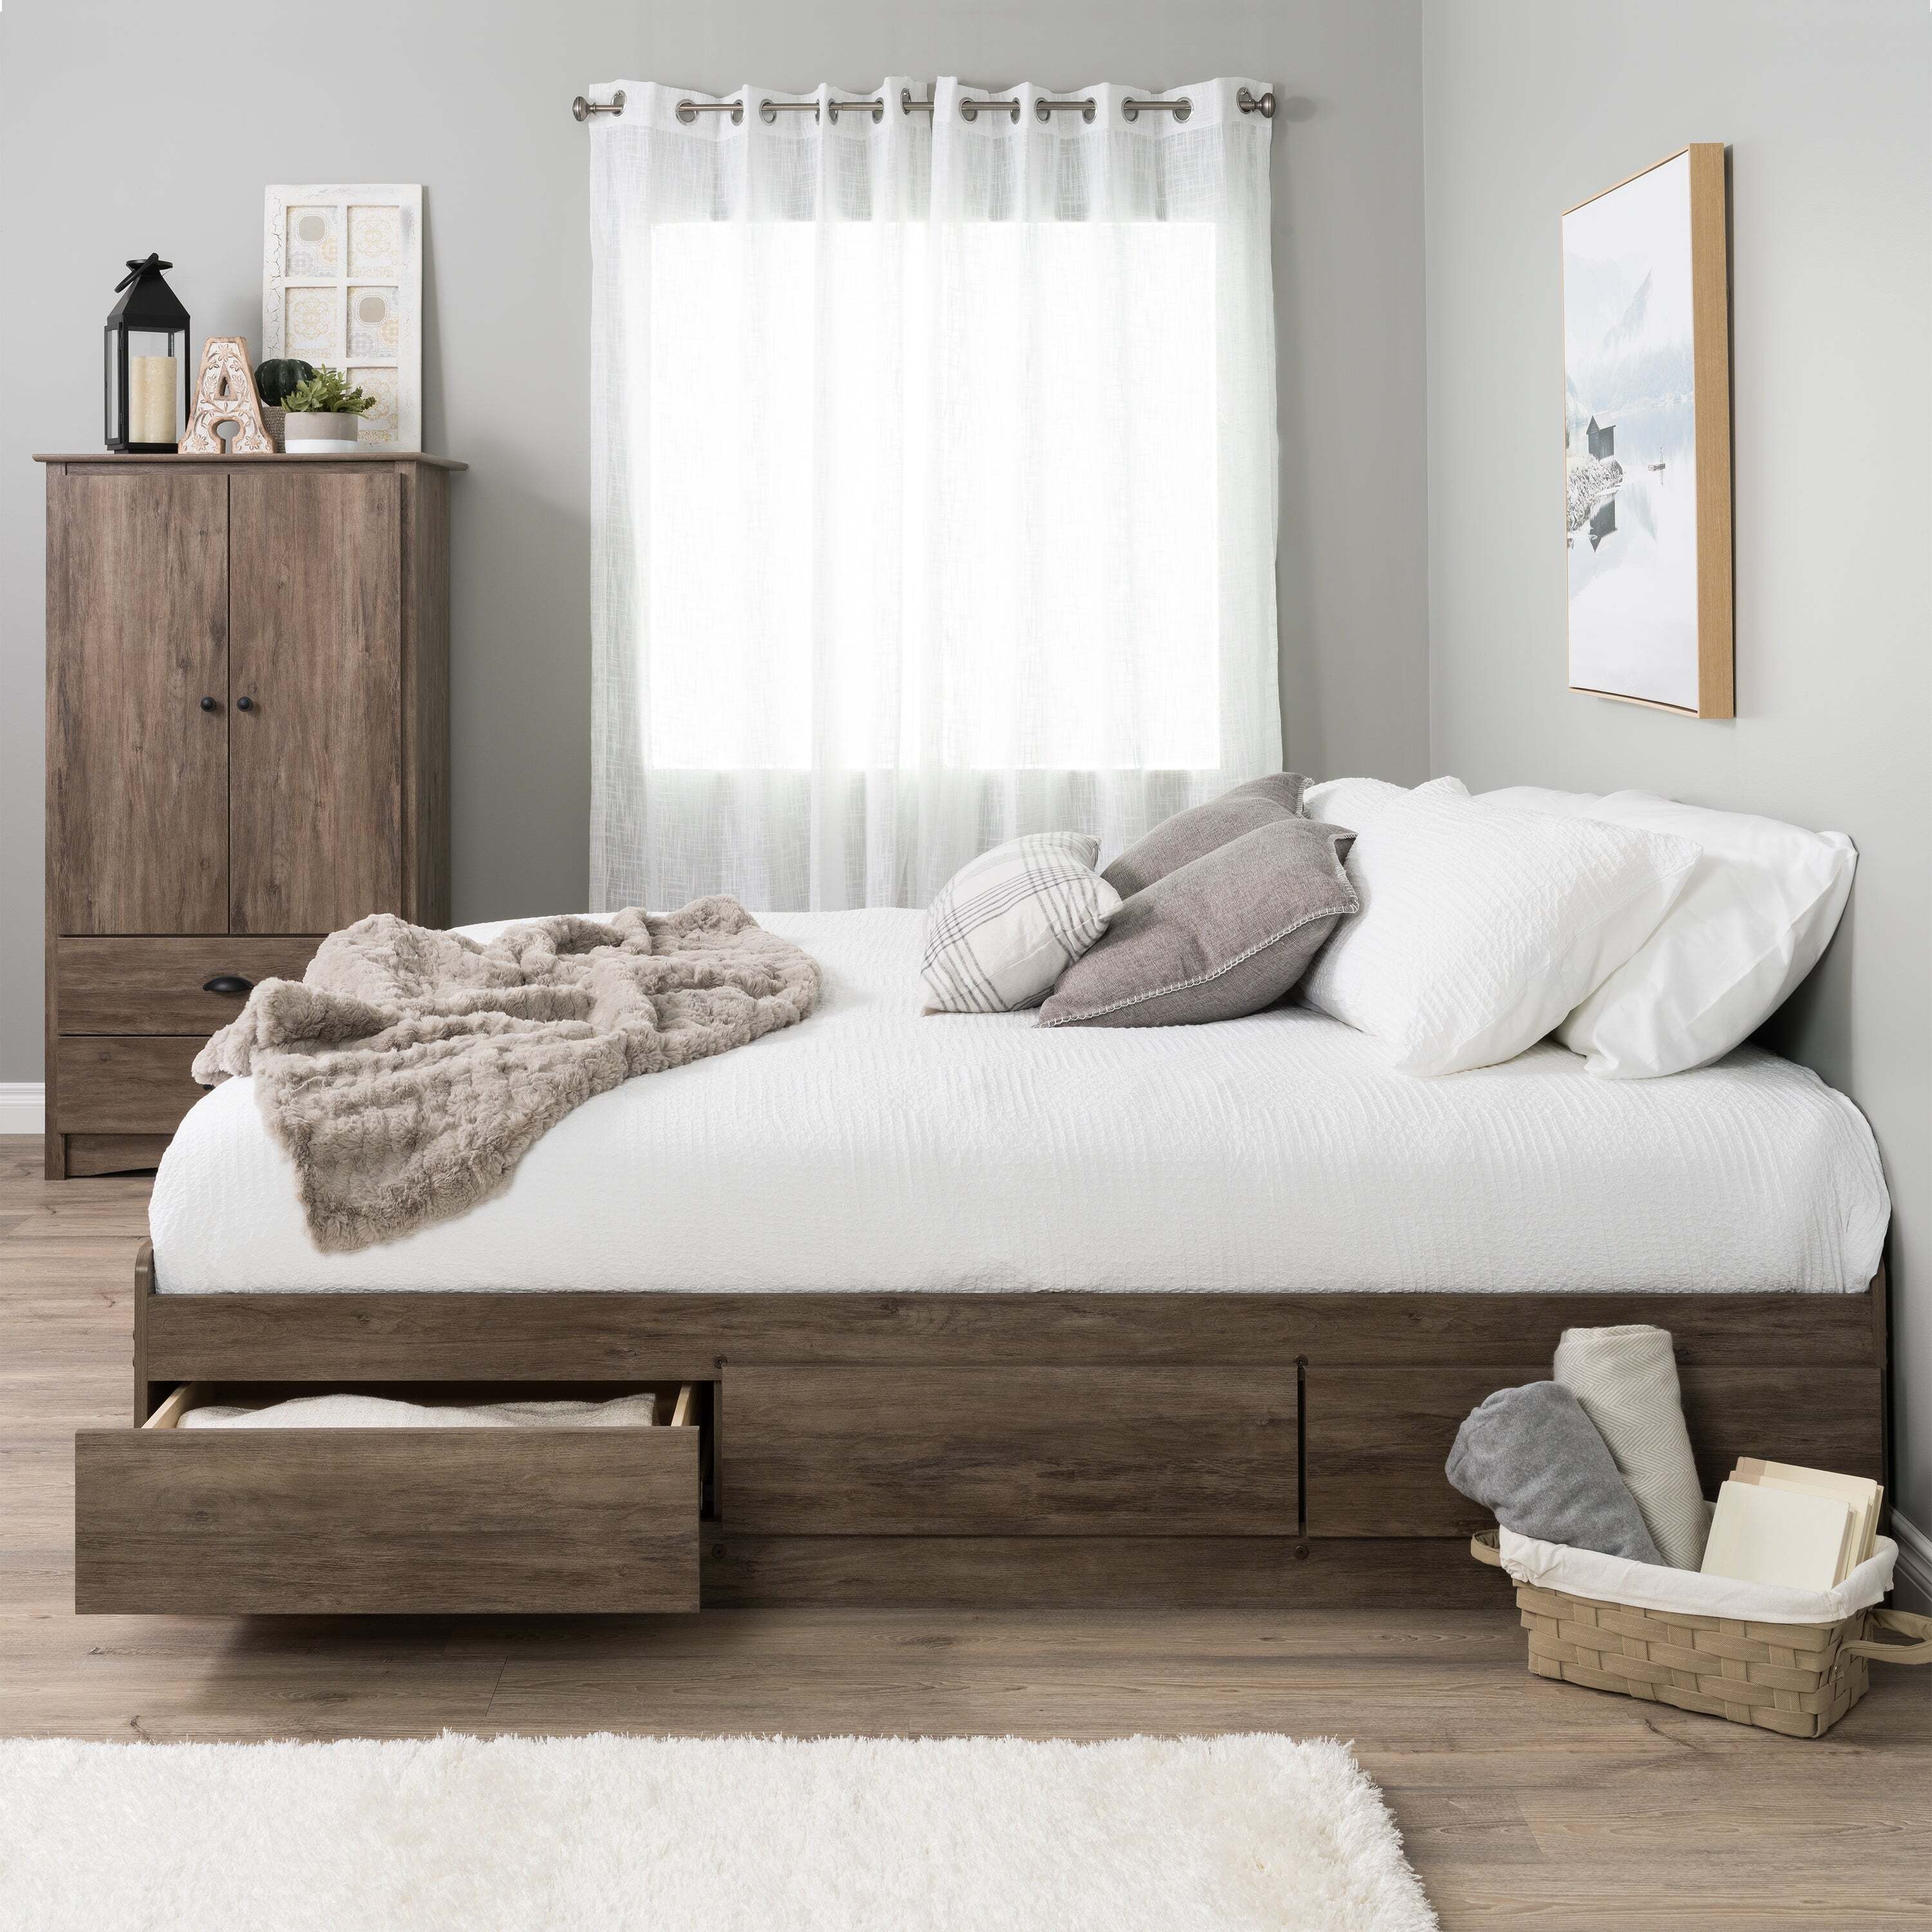 More minimalist full size platform bed with storage (no headboard)